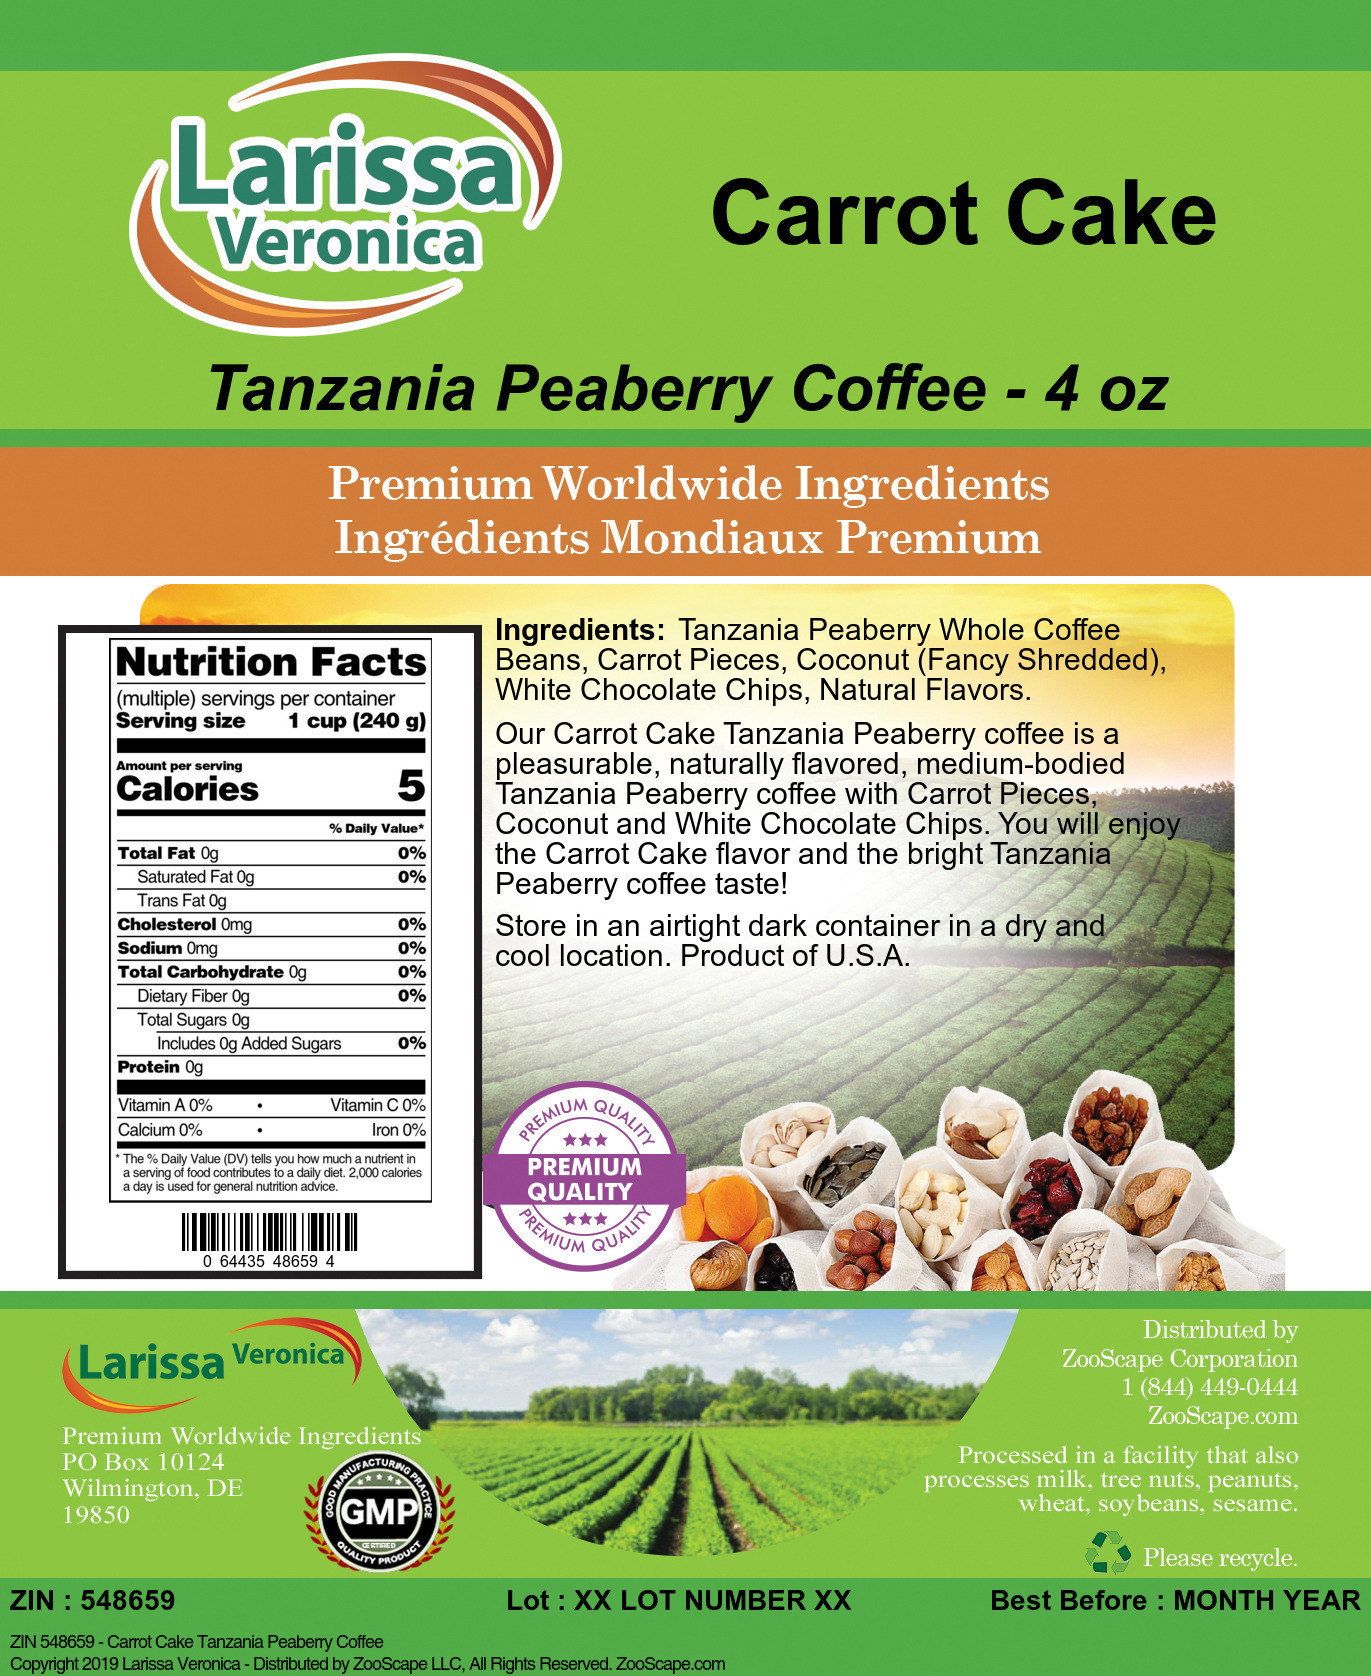 Carrot Cake Tanzania Peaberry Coffee - Label